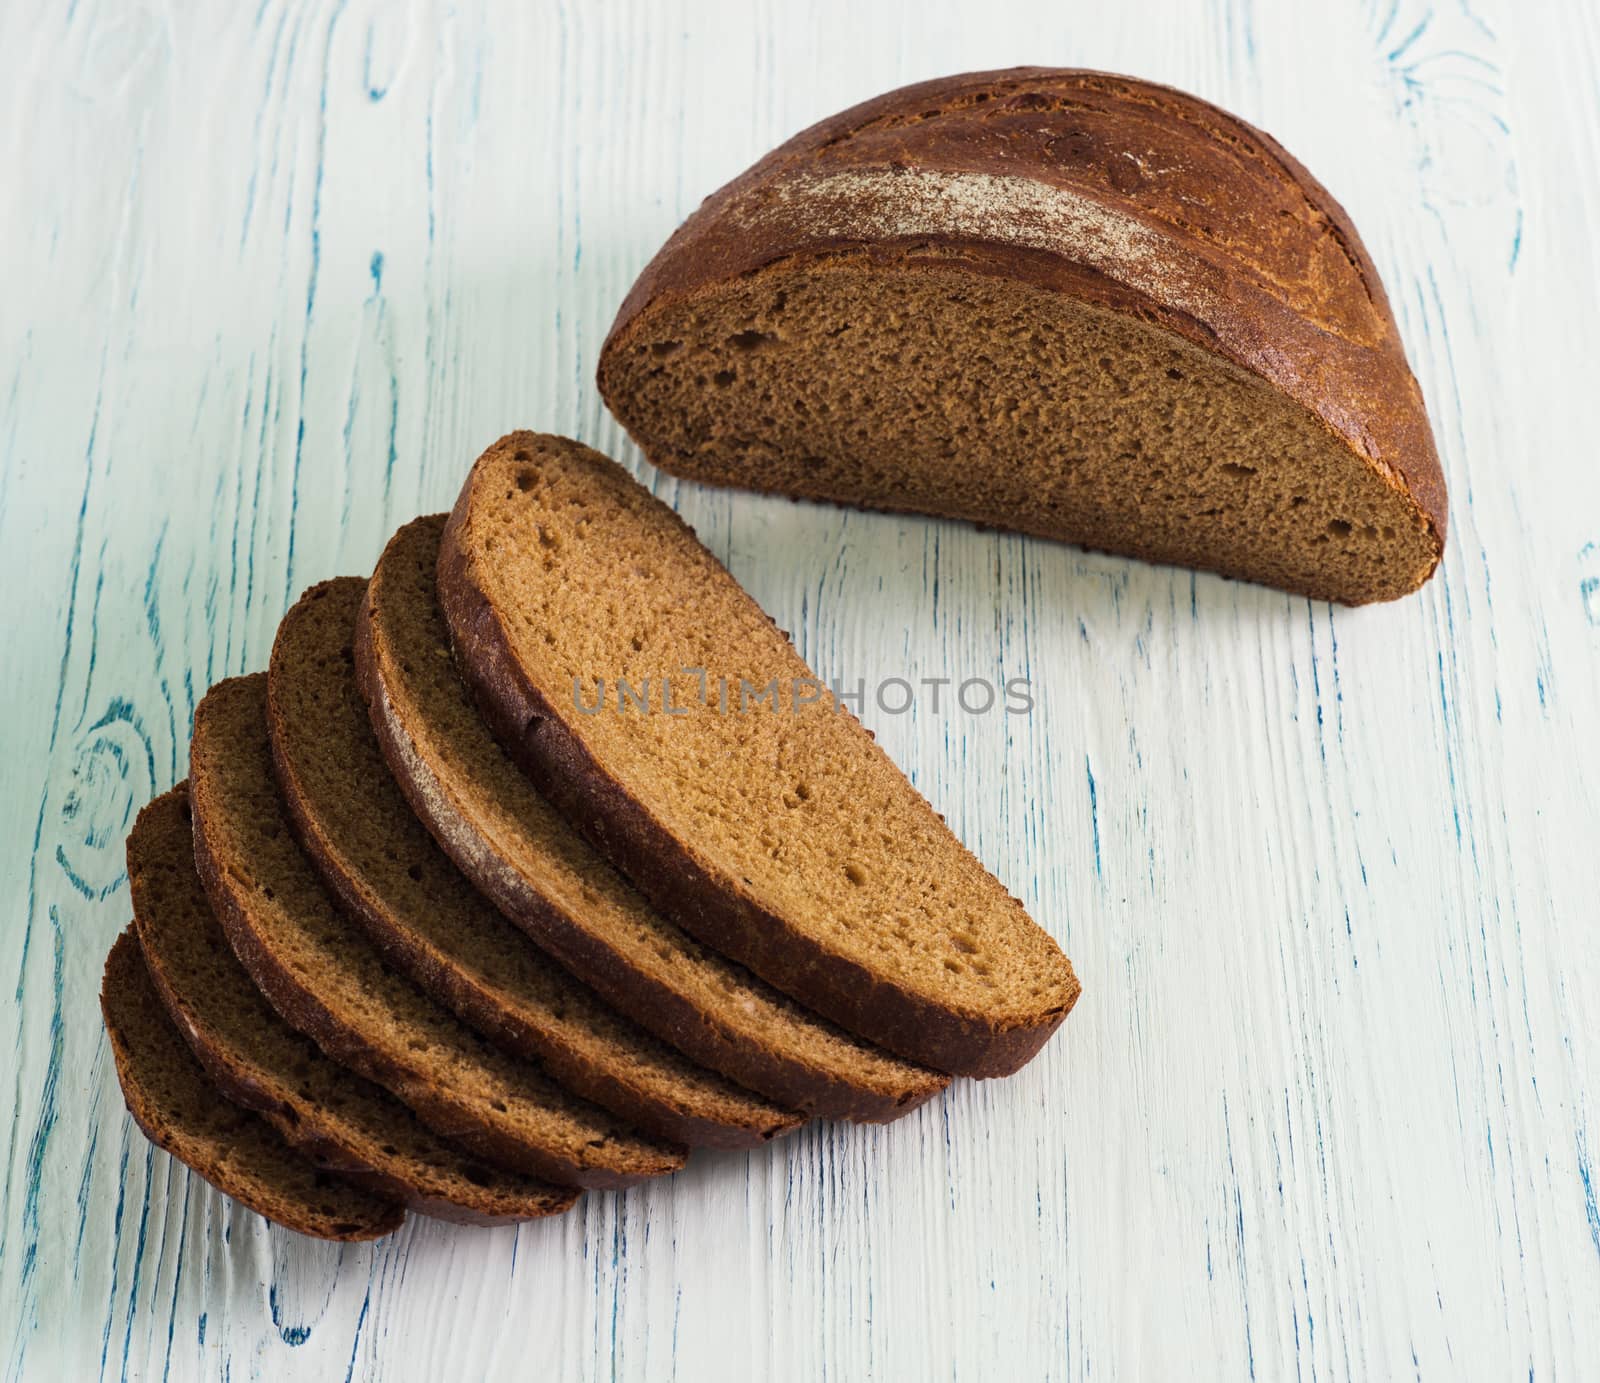 Sliced rye bread on light wooden table